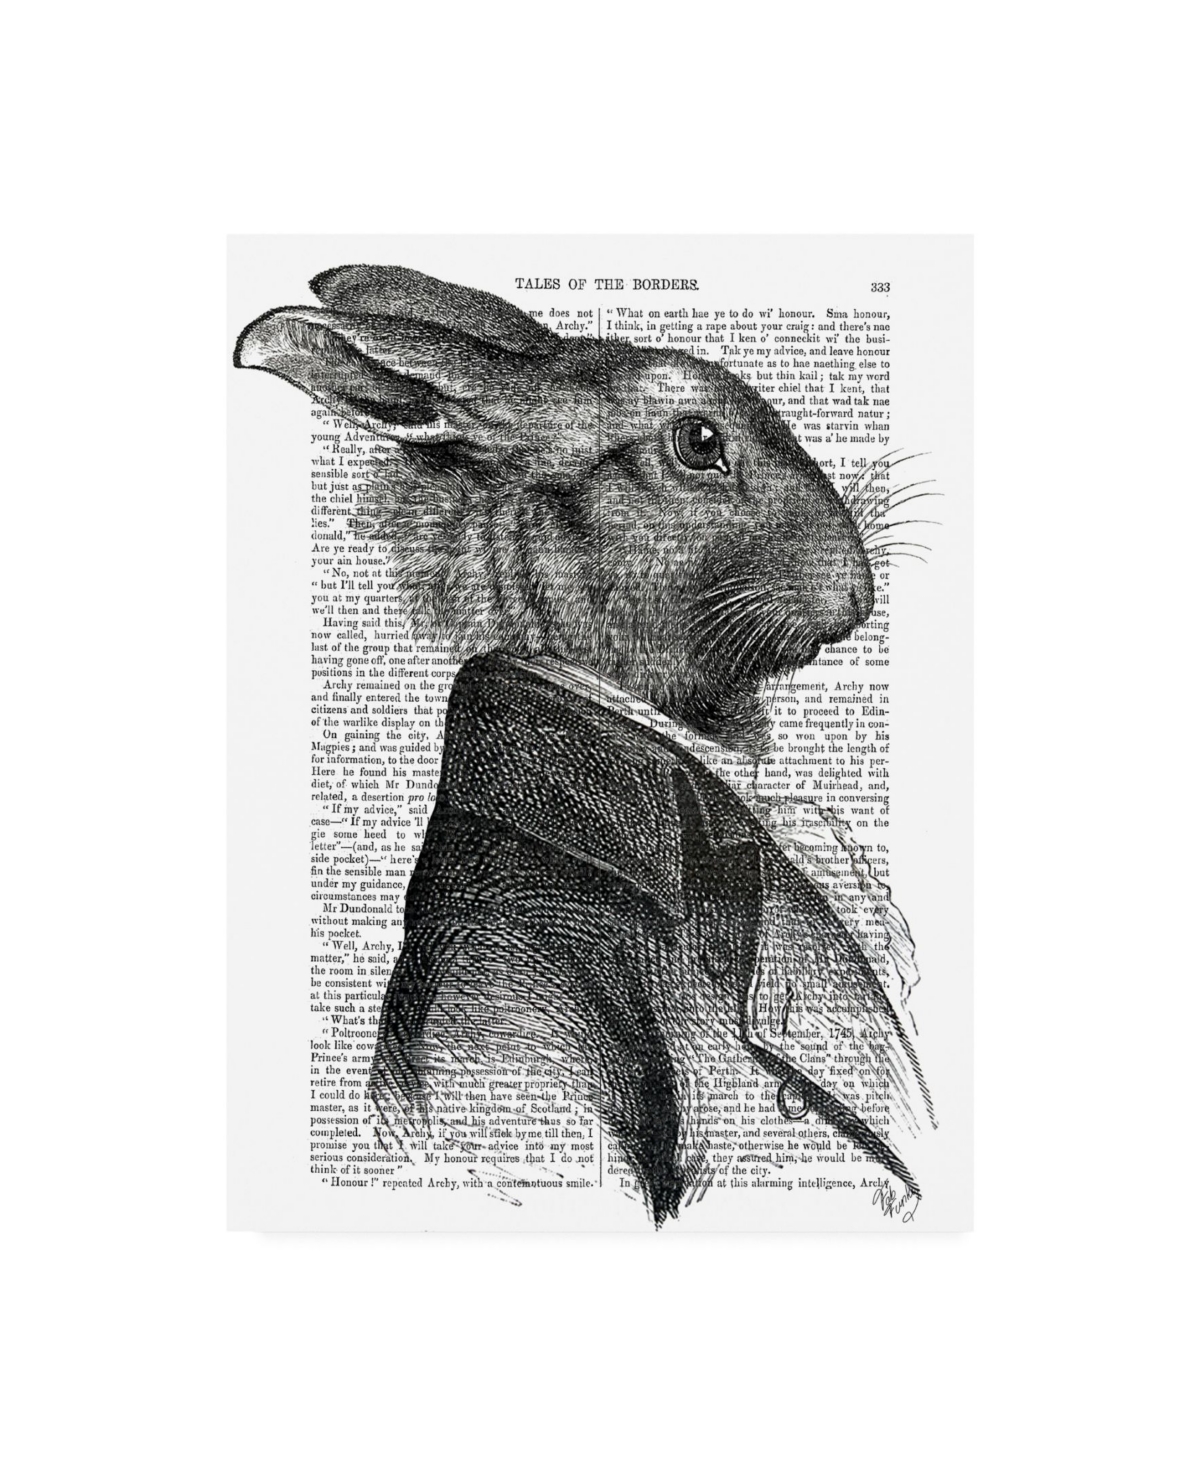 White Rabbit портреты кроликов